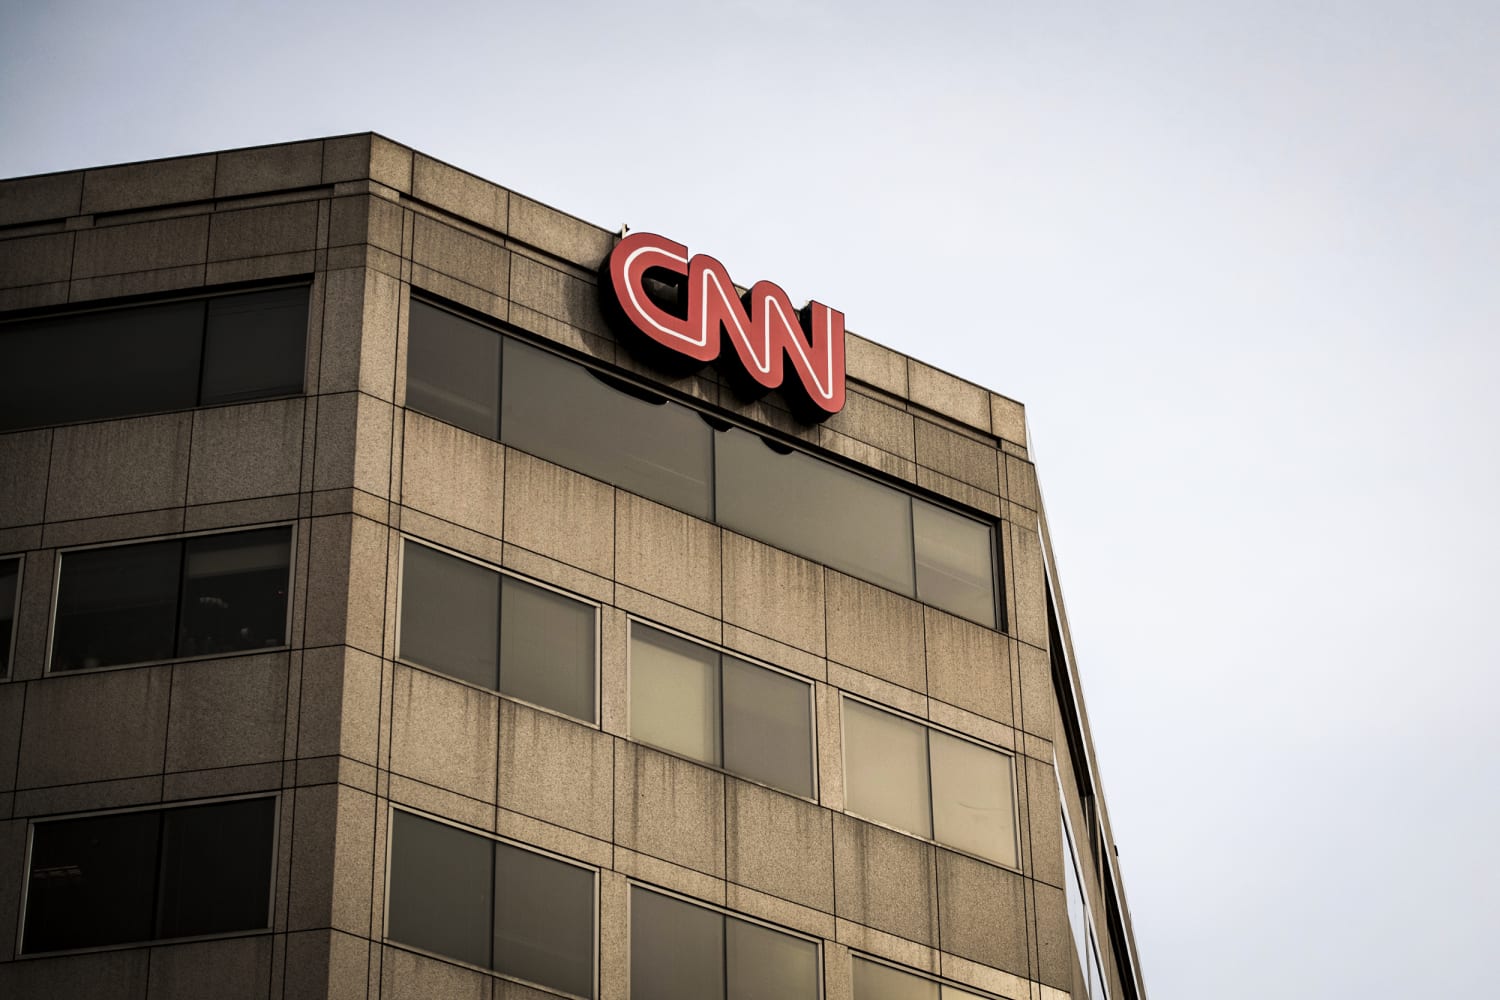 Second former CNN producer under police investigation